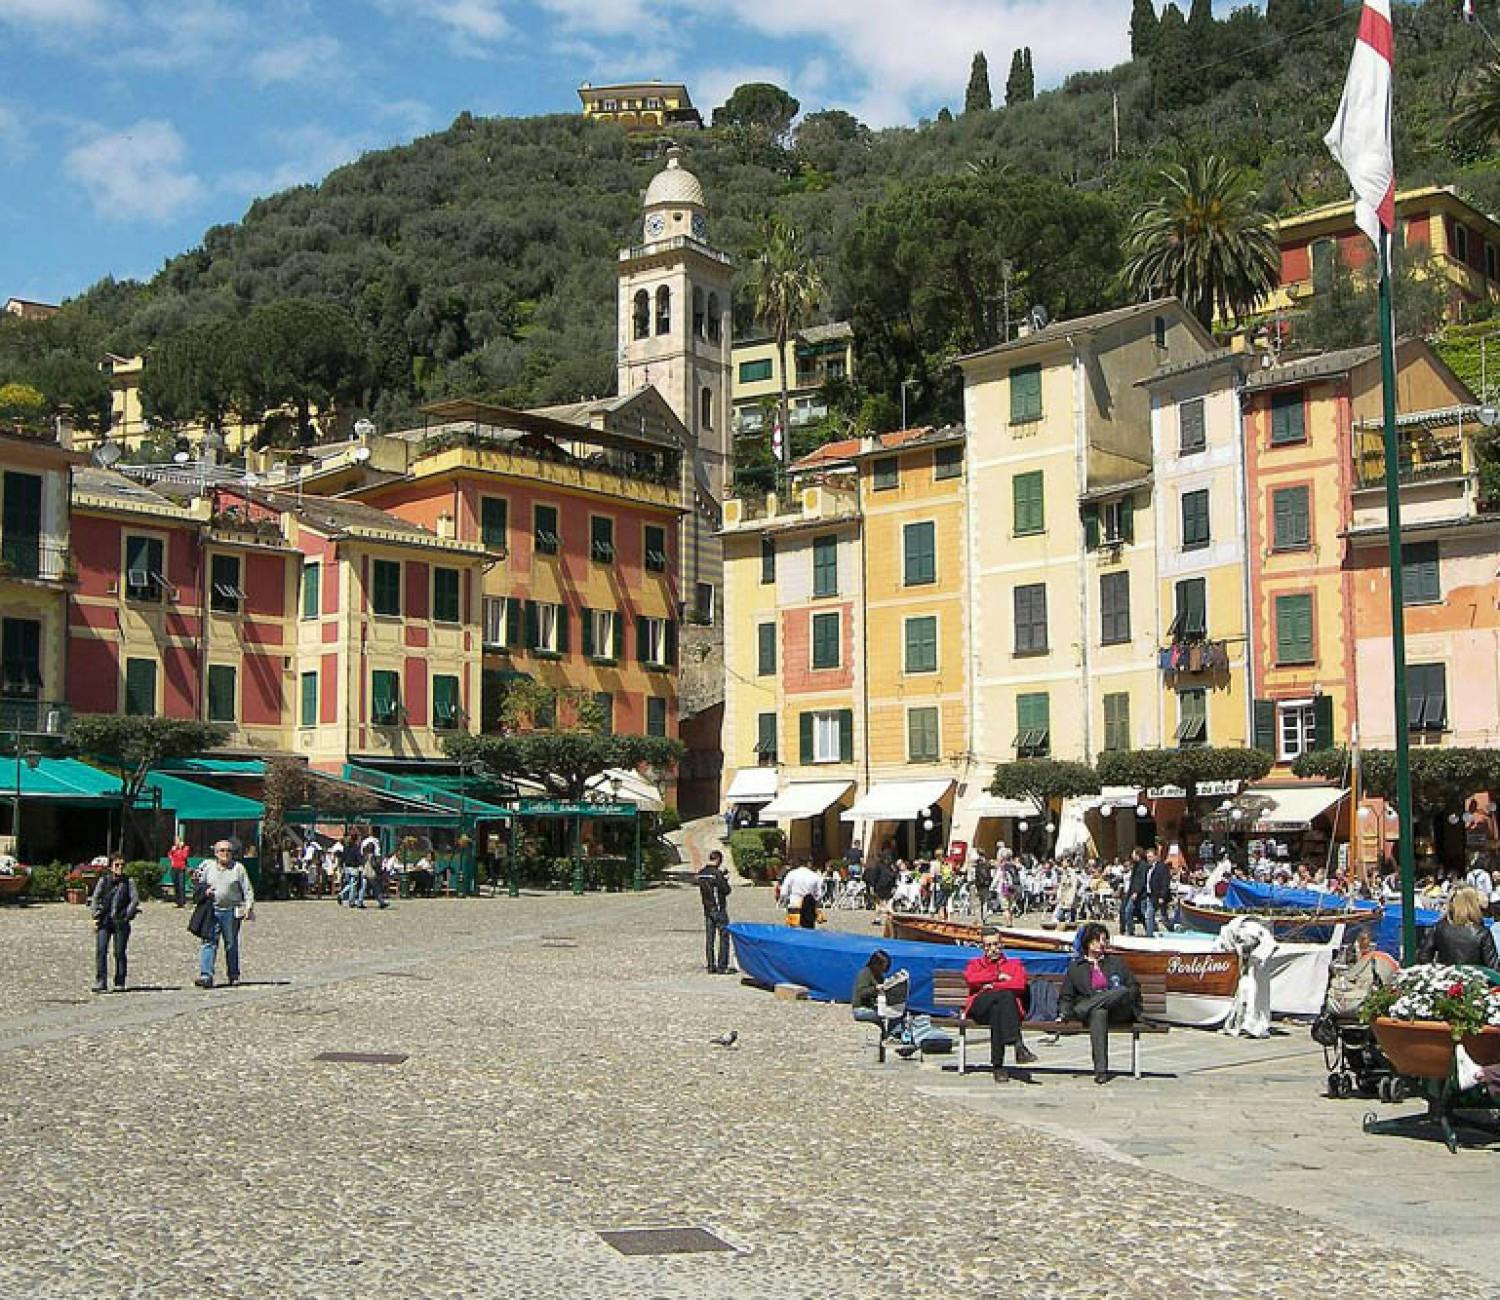 Tour of Genoa and day trip to Portofino from Genoa-1